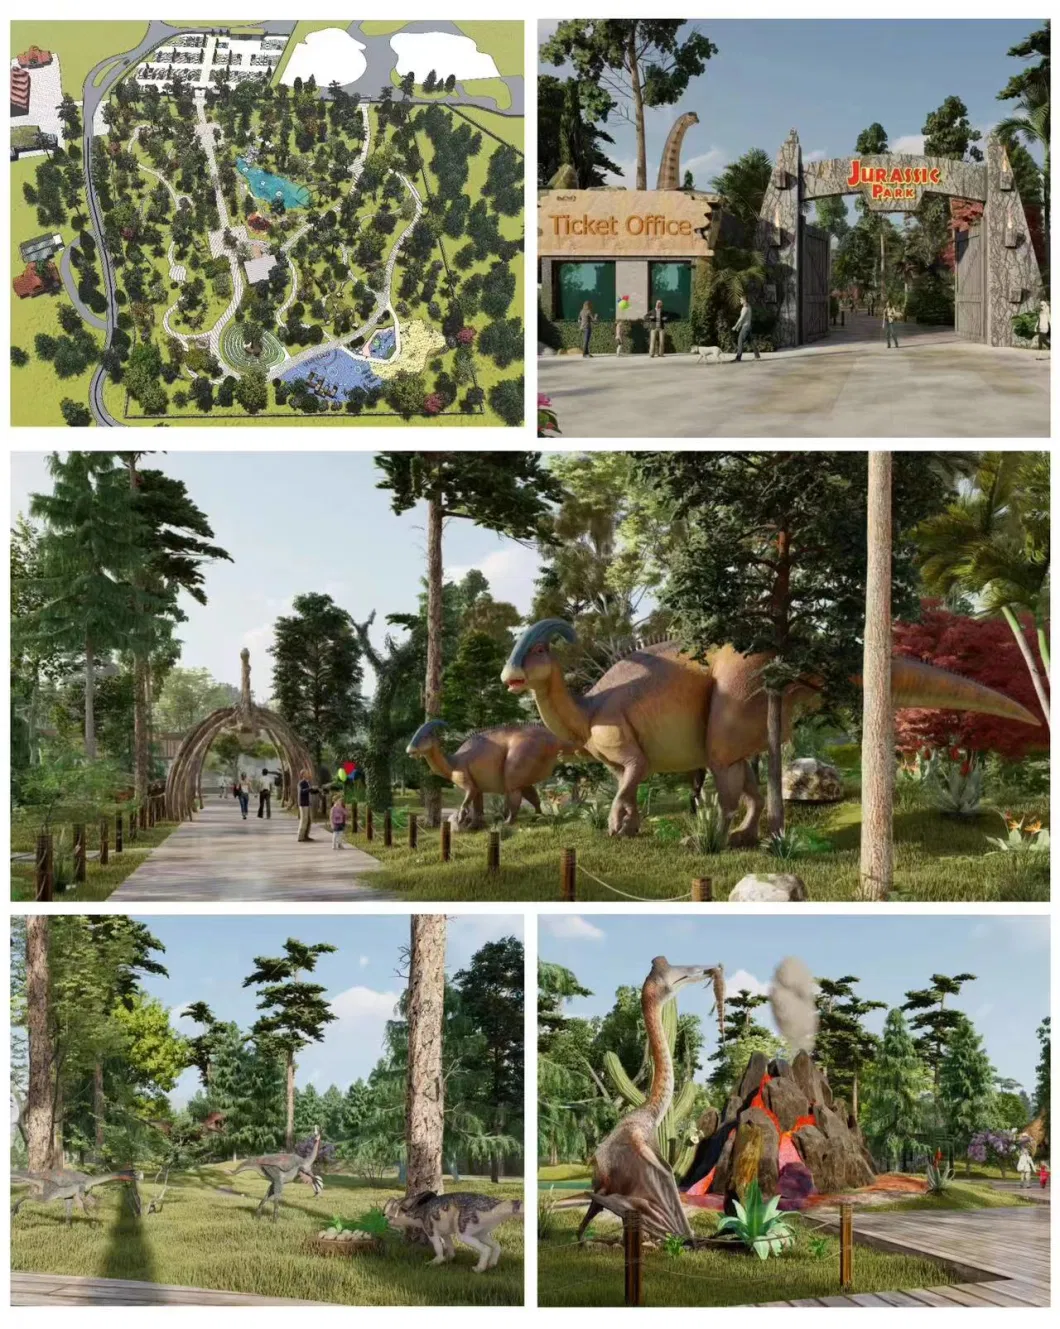 Jn-Zm24 New Animatronic Dinosaur Model Theme Park Walking Dinosaur for Sale